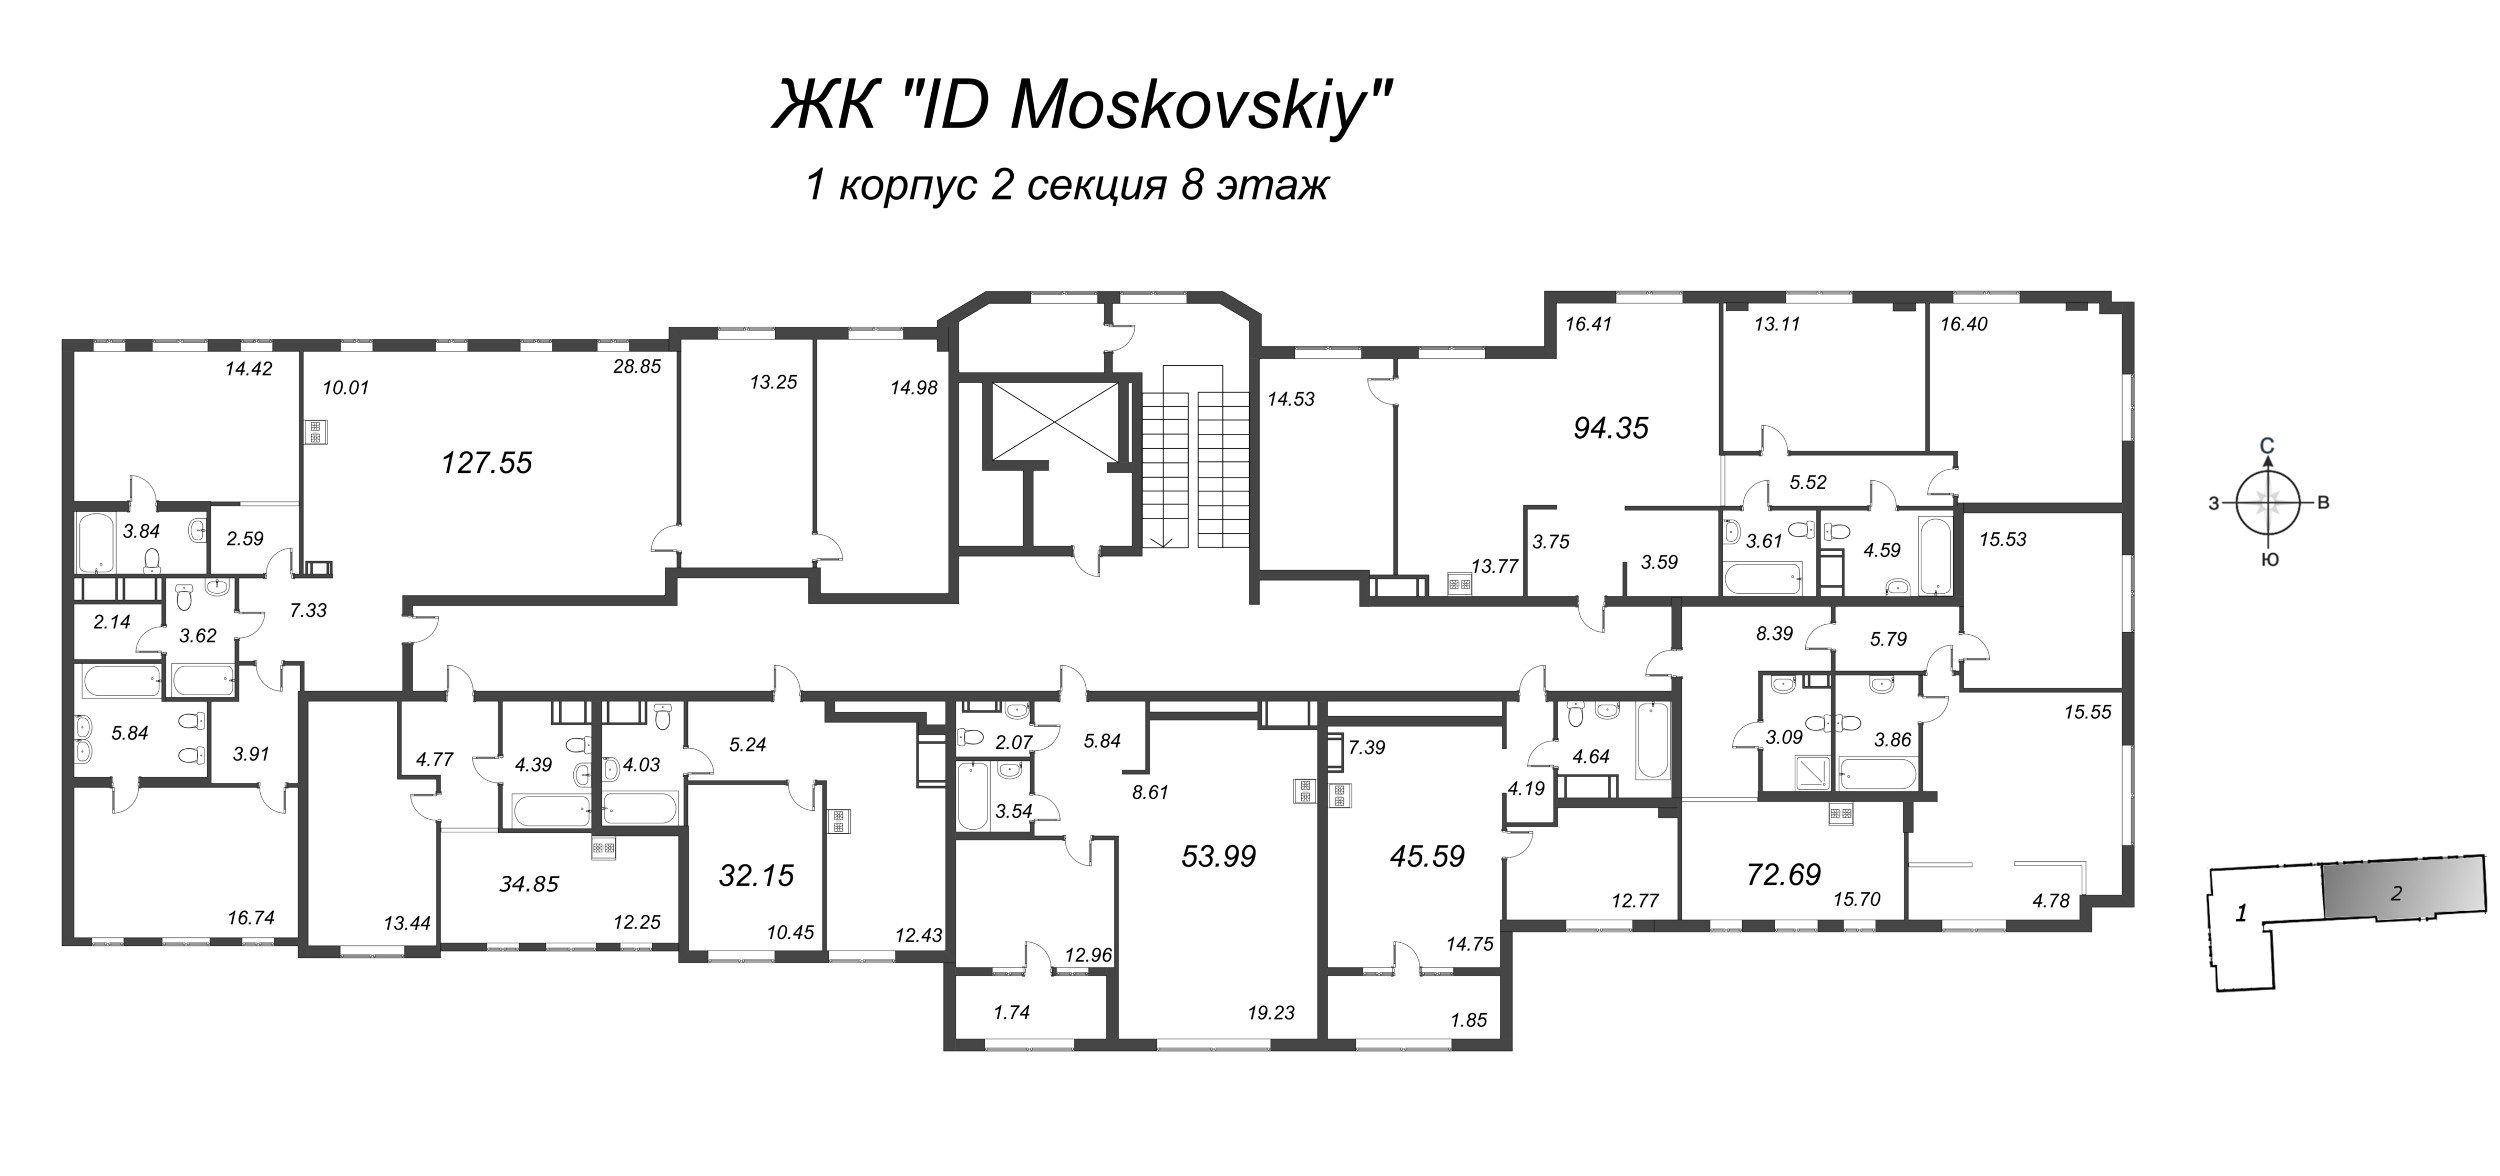 3-комнатная (Евро) квартира, 72.69 м² - планировка этажа